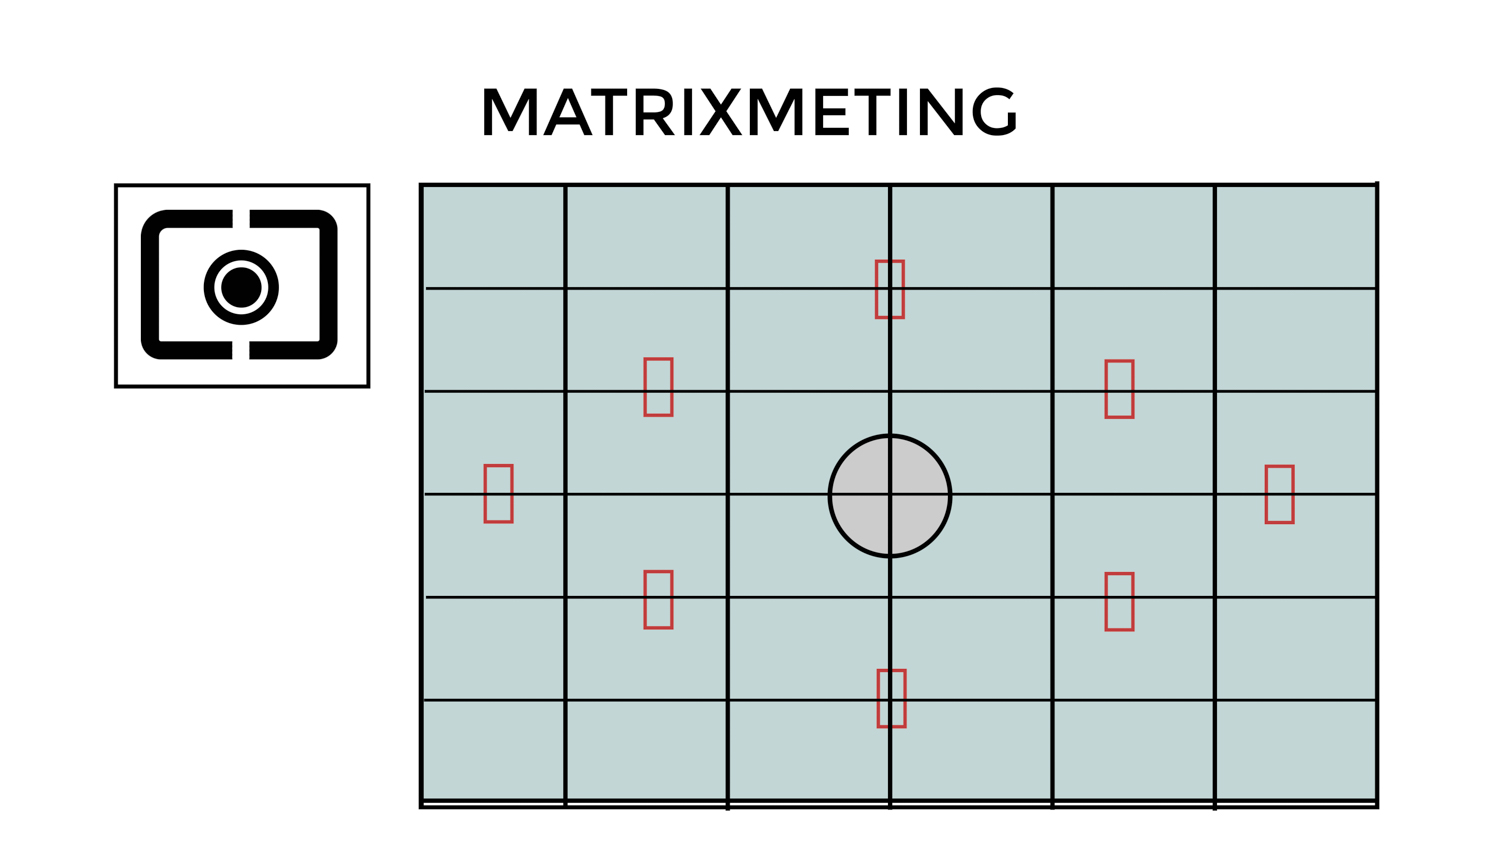 Lichtmeting matrixmeting, Meervlaksmeting - Avondfotografie.nl